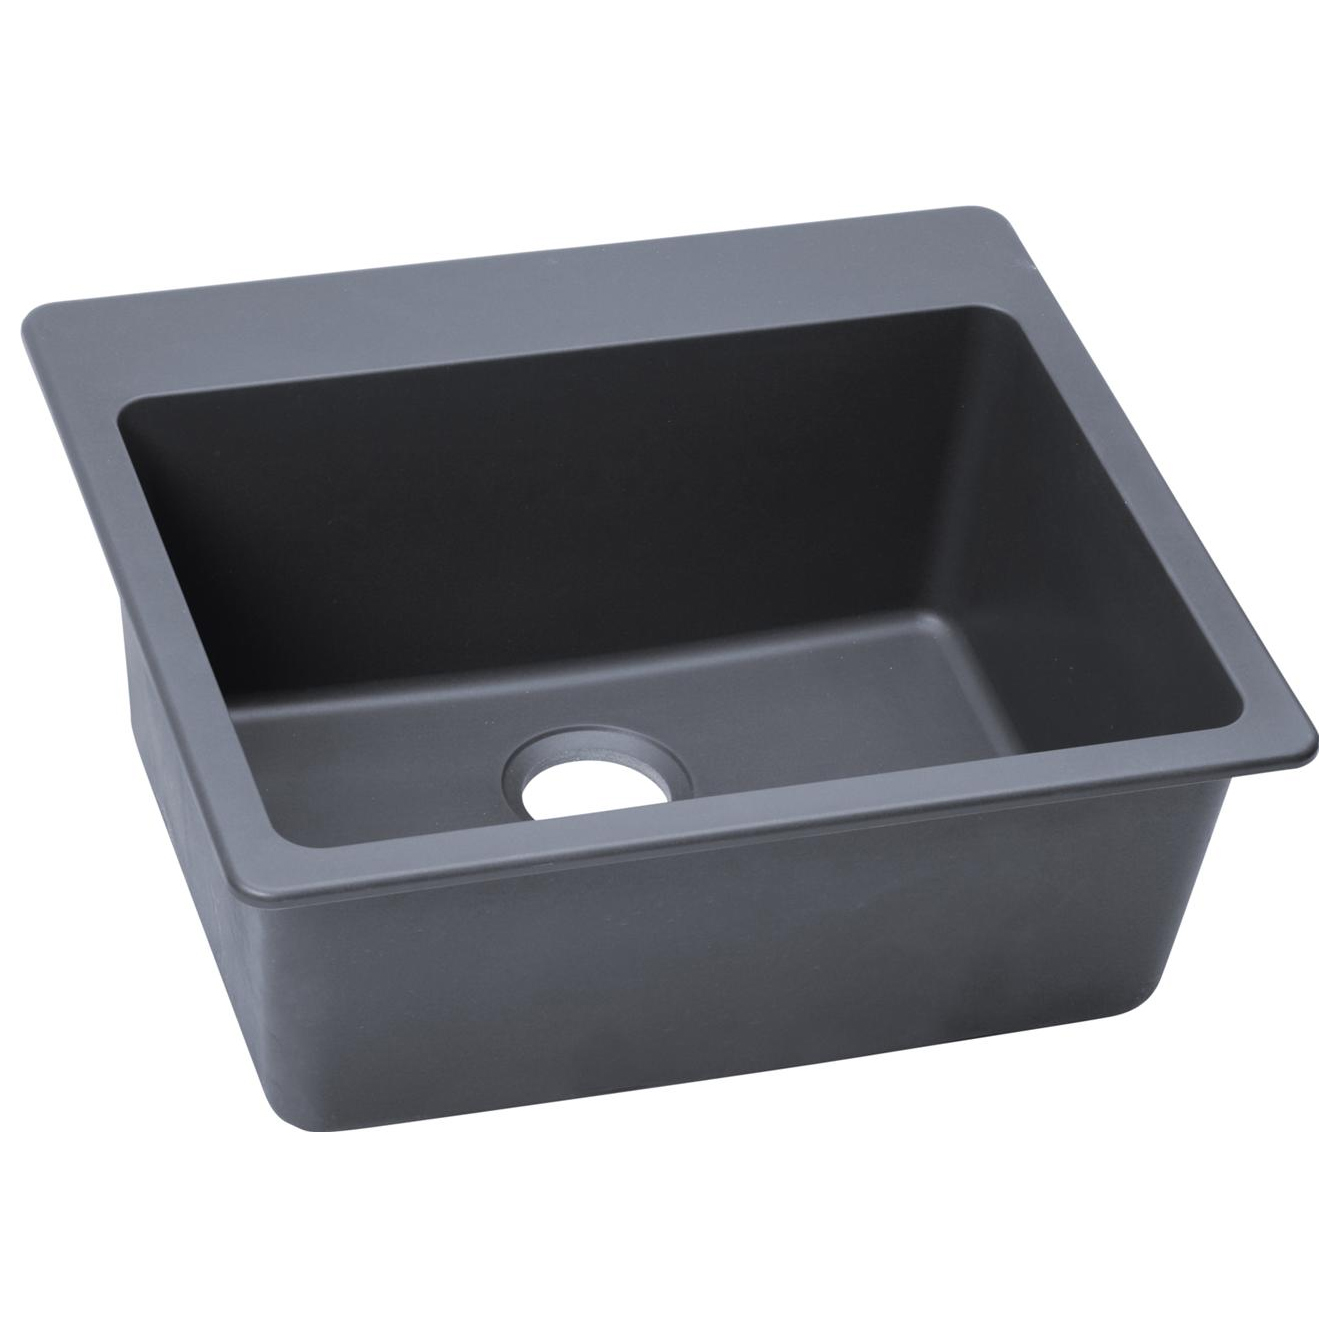 Quartz Classic 25x22x9-1/2" Single Bowl Drop-In Sink in Gray